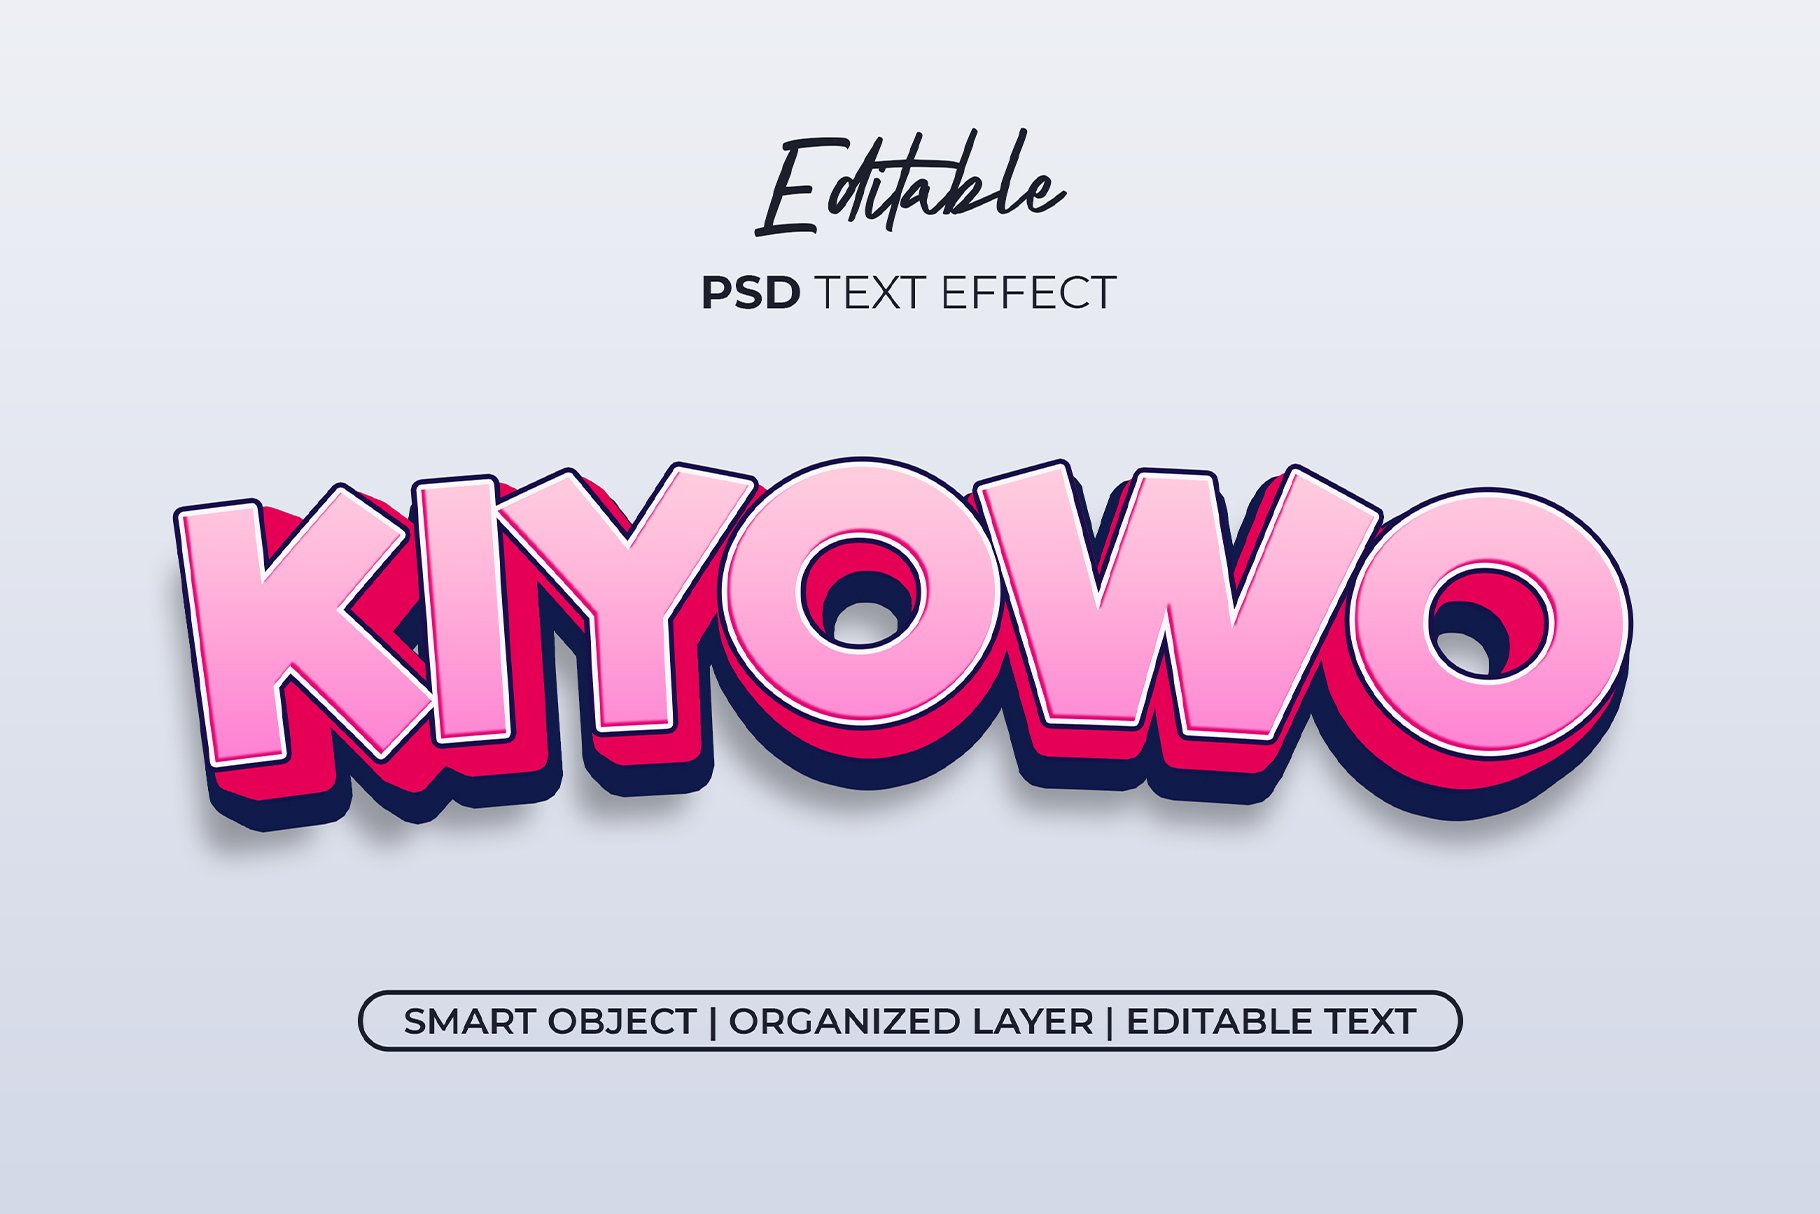 Editable Kiyowo Text Effectcover image.